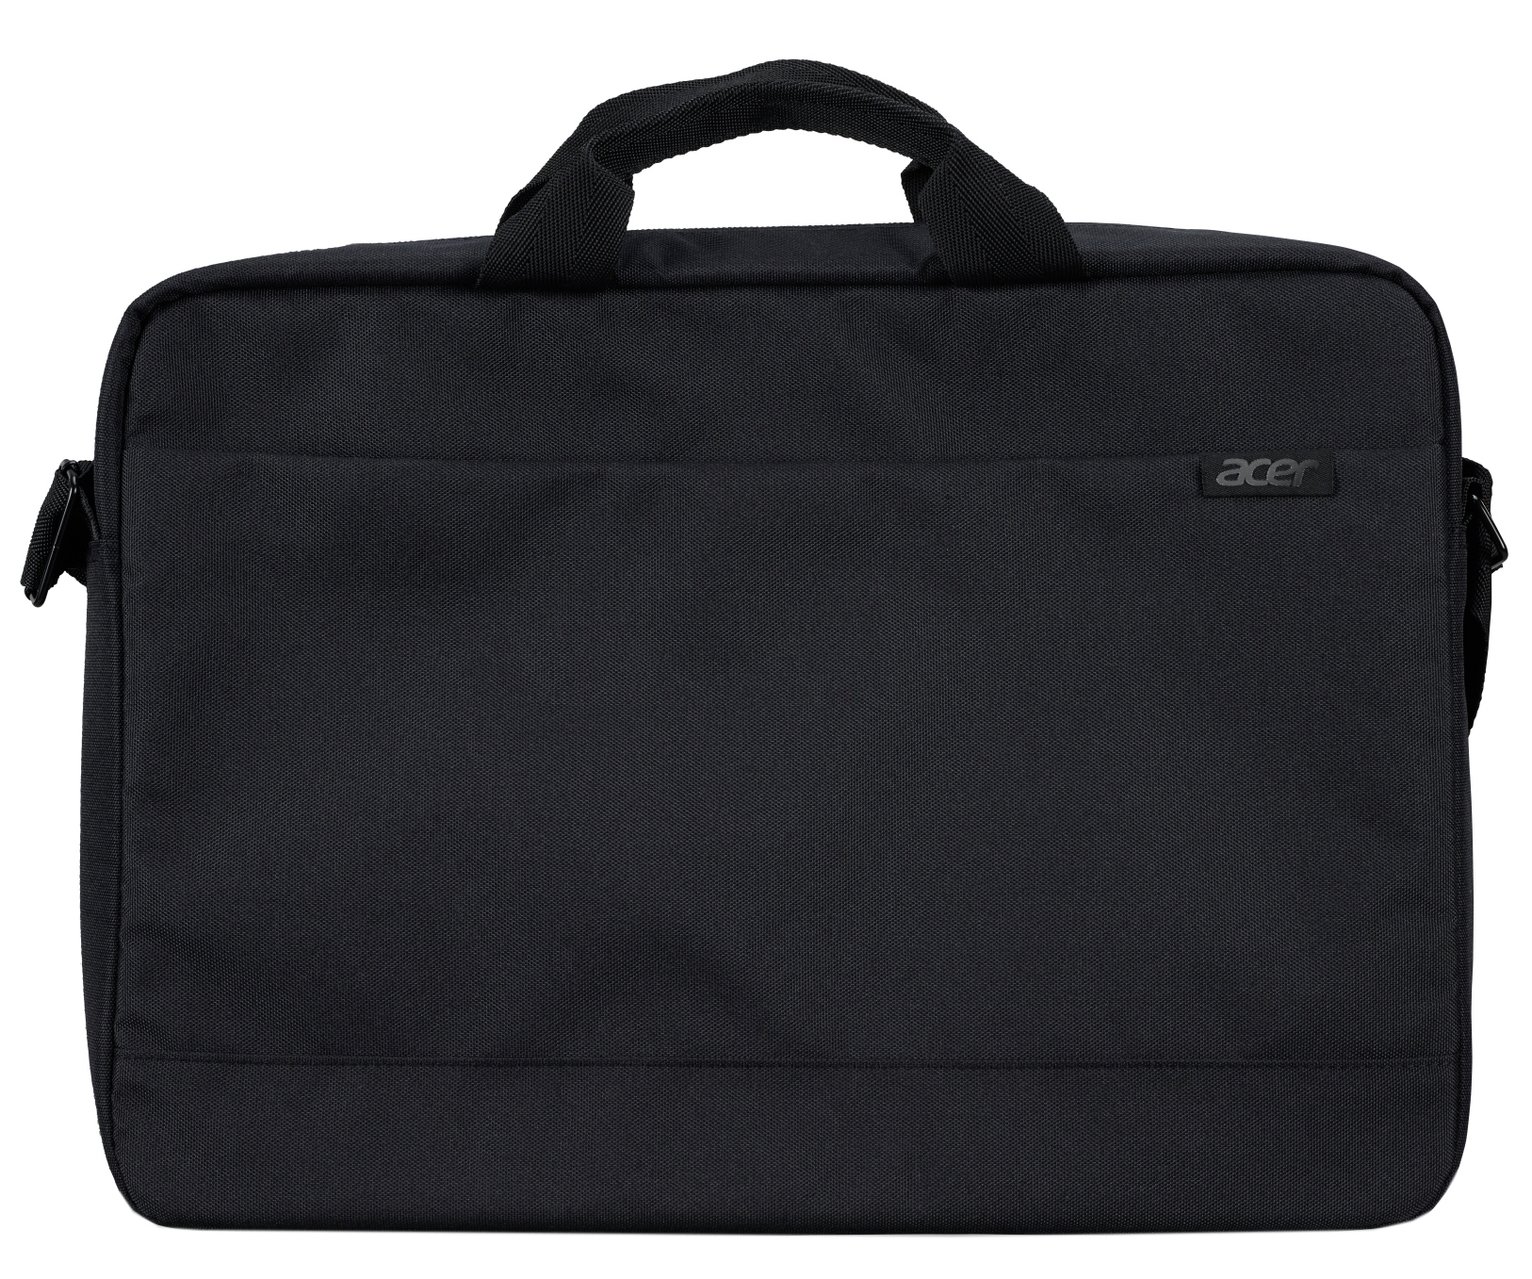 Acer 15.6 Inch Laptop Carry Case - Black